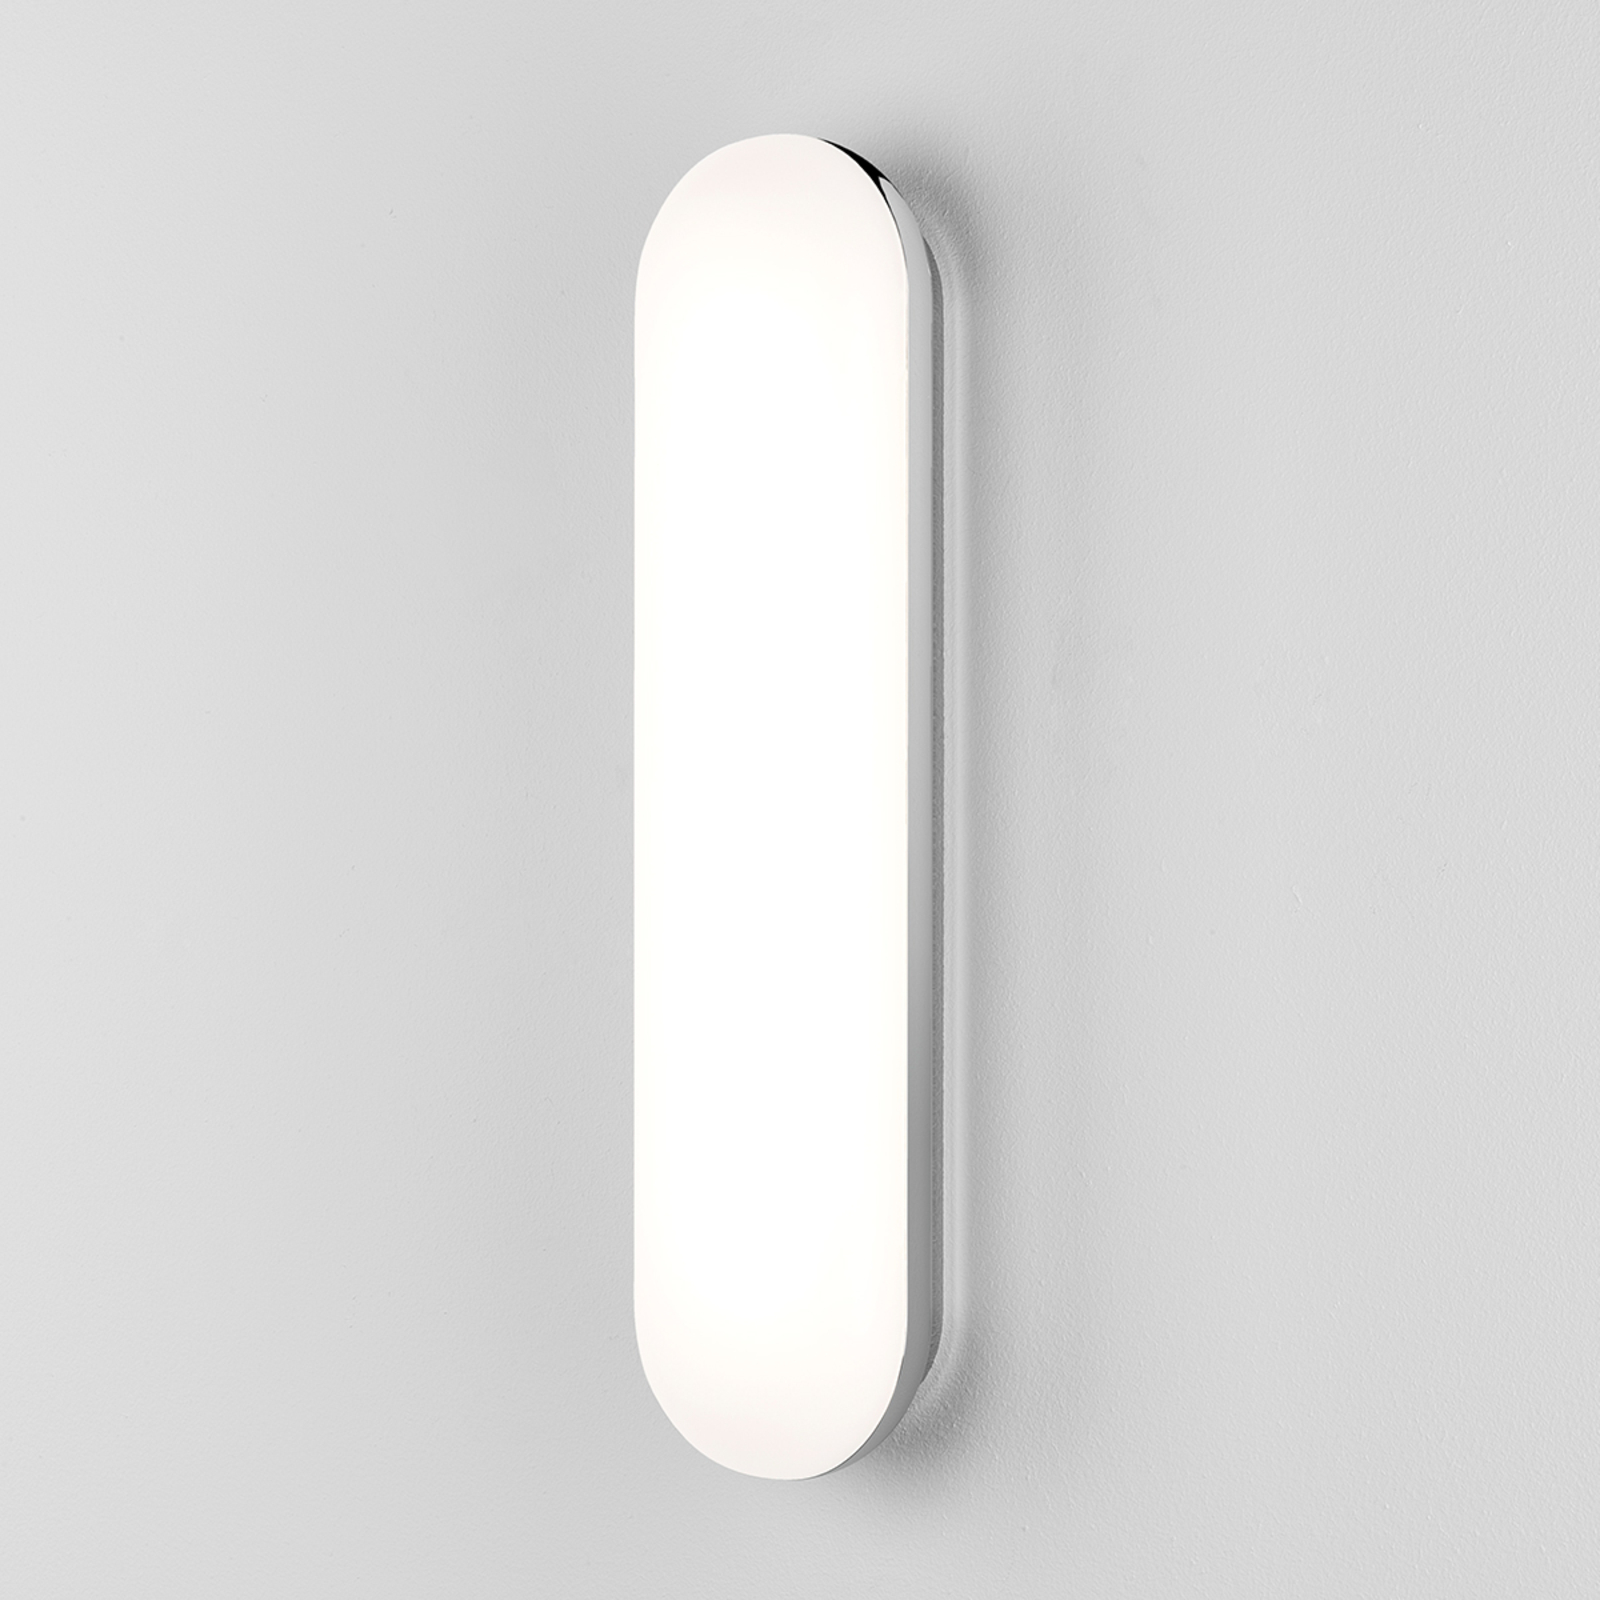 Astro Altea - shiny chrome LED bathroom wall light